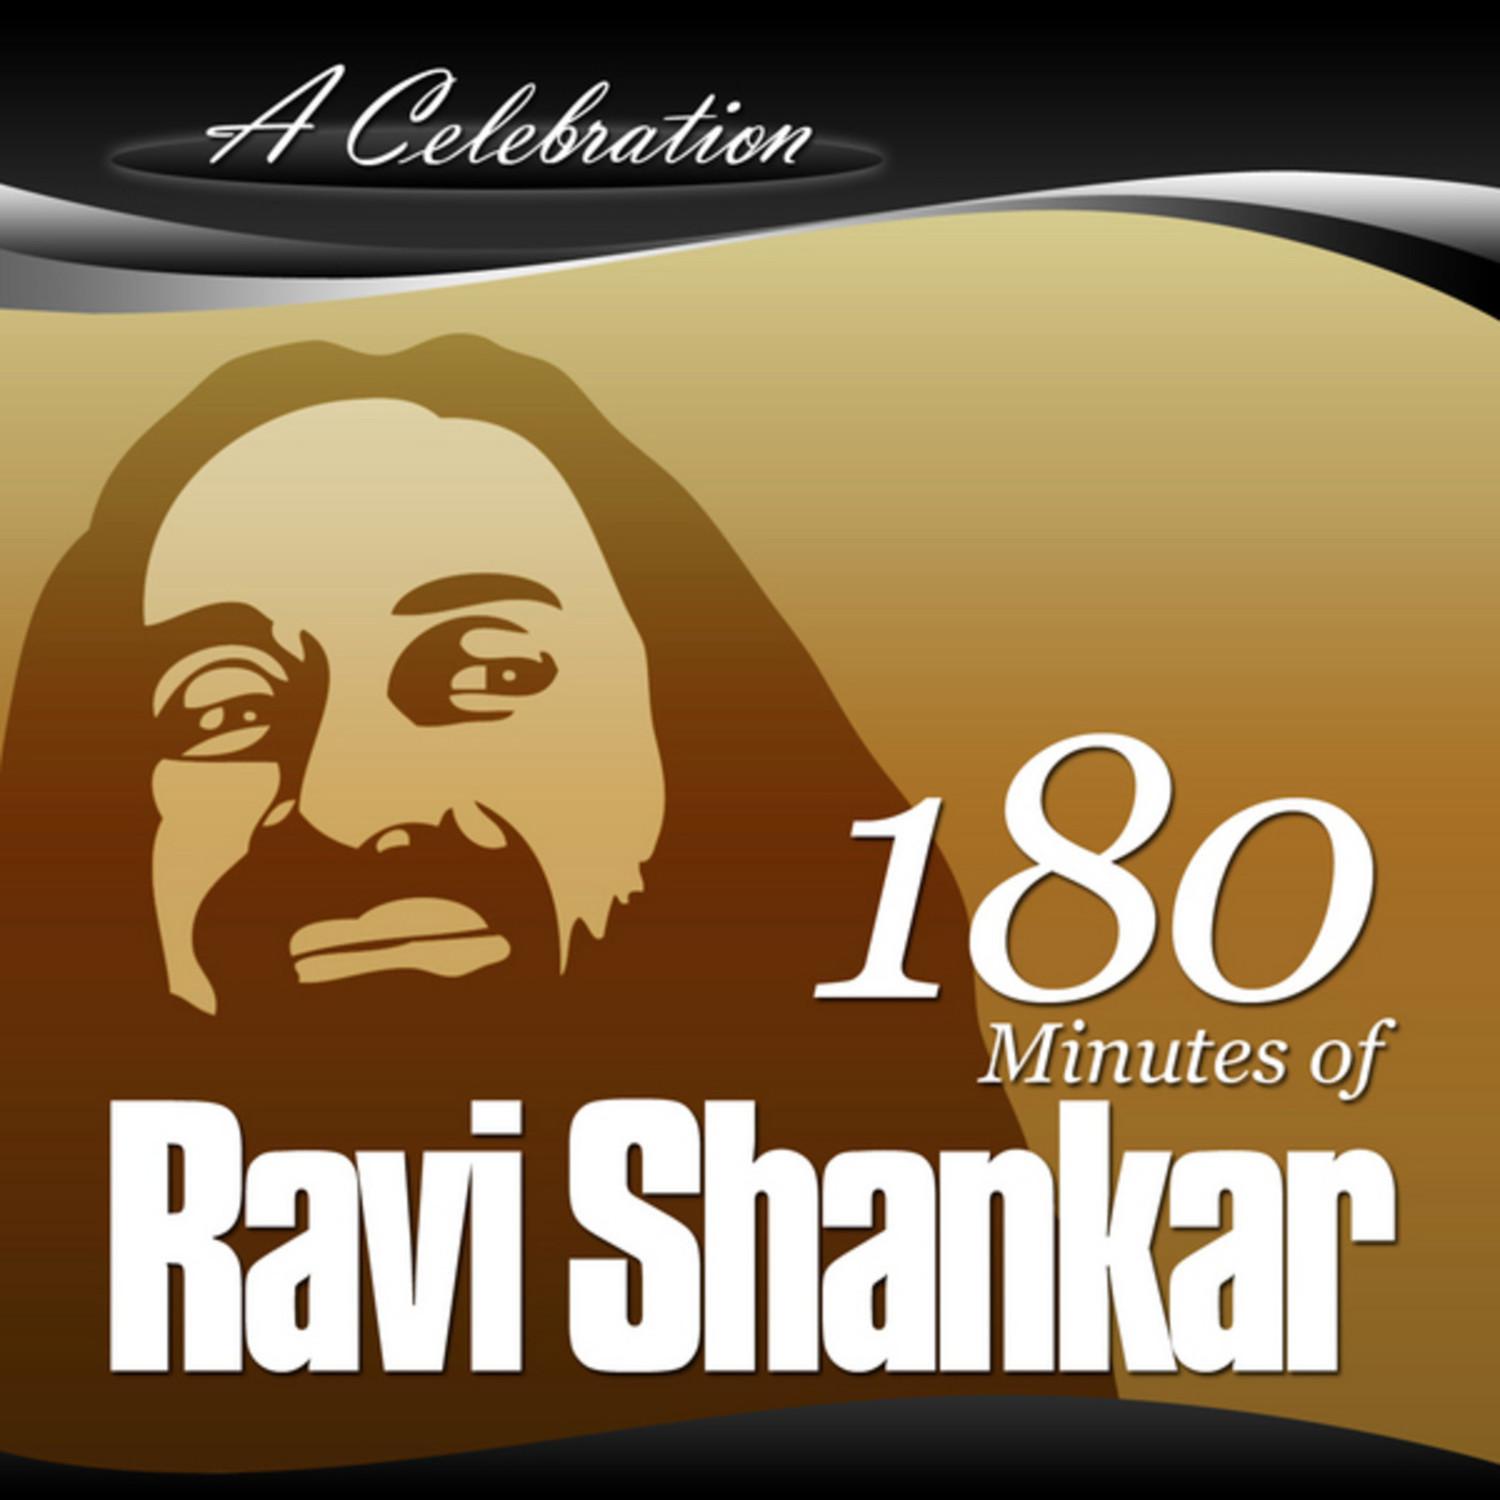 A Celebration - 180 Minutes of Ravi Shankar